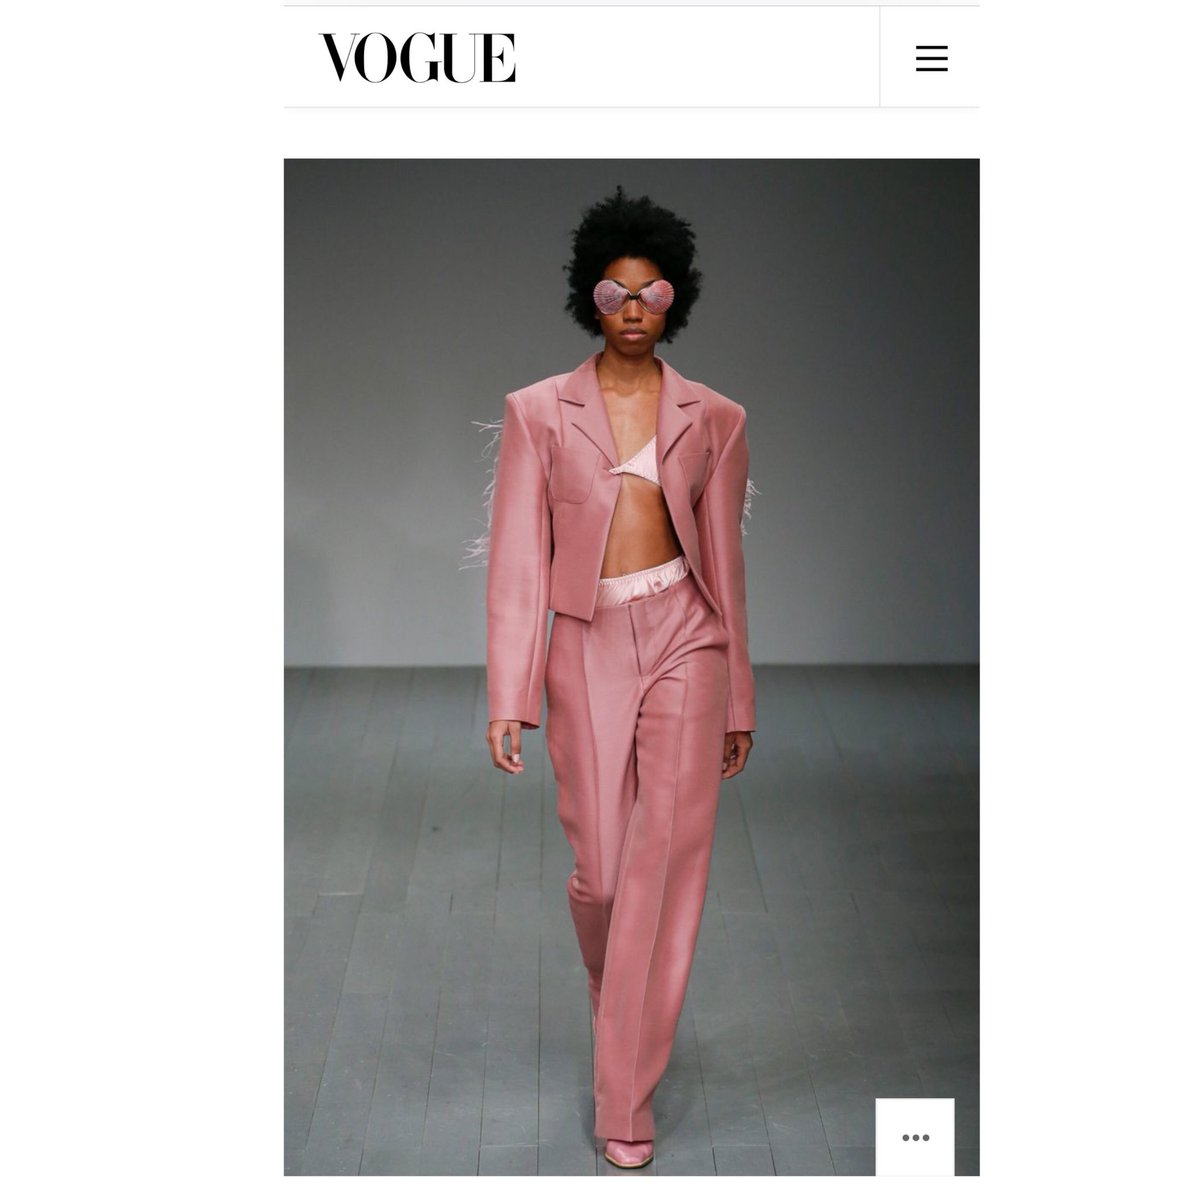 London Fashion Week #lfw2019 @ReigosaRosa  Here I am!! British Vogue Designer: @rebeccajeffs @mafcsm @voguerunway @uk.vogue @voguelondon @rosareigosa @maccosmetics @lorealpro #LondonFashionWeek #proud #my1stseason #fashion #designer #clothes #pink #love #model #newface #cuban